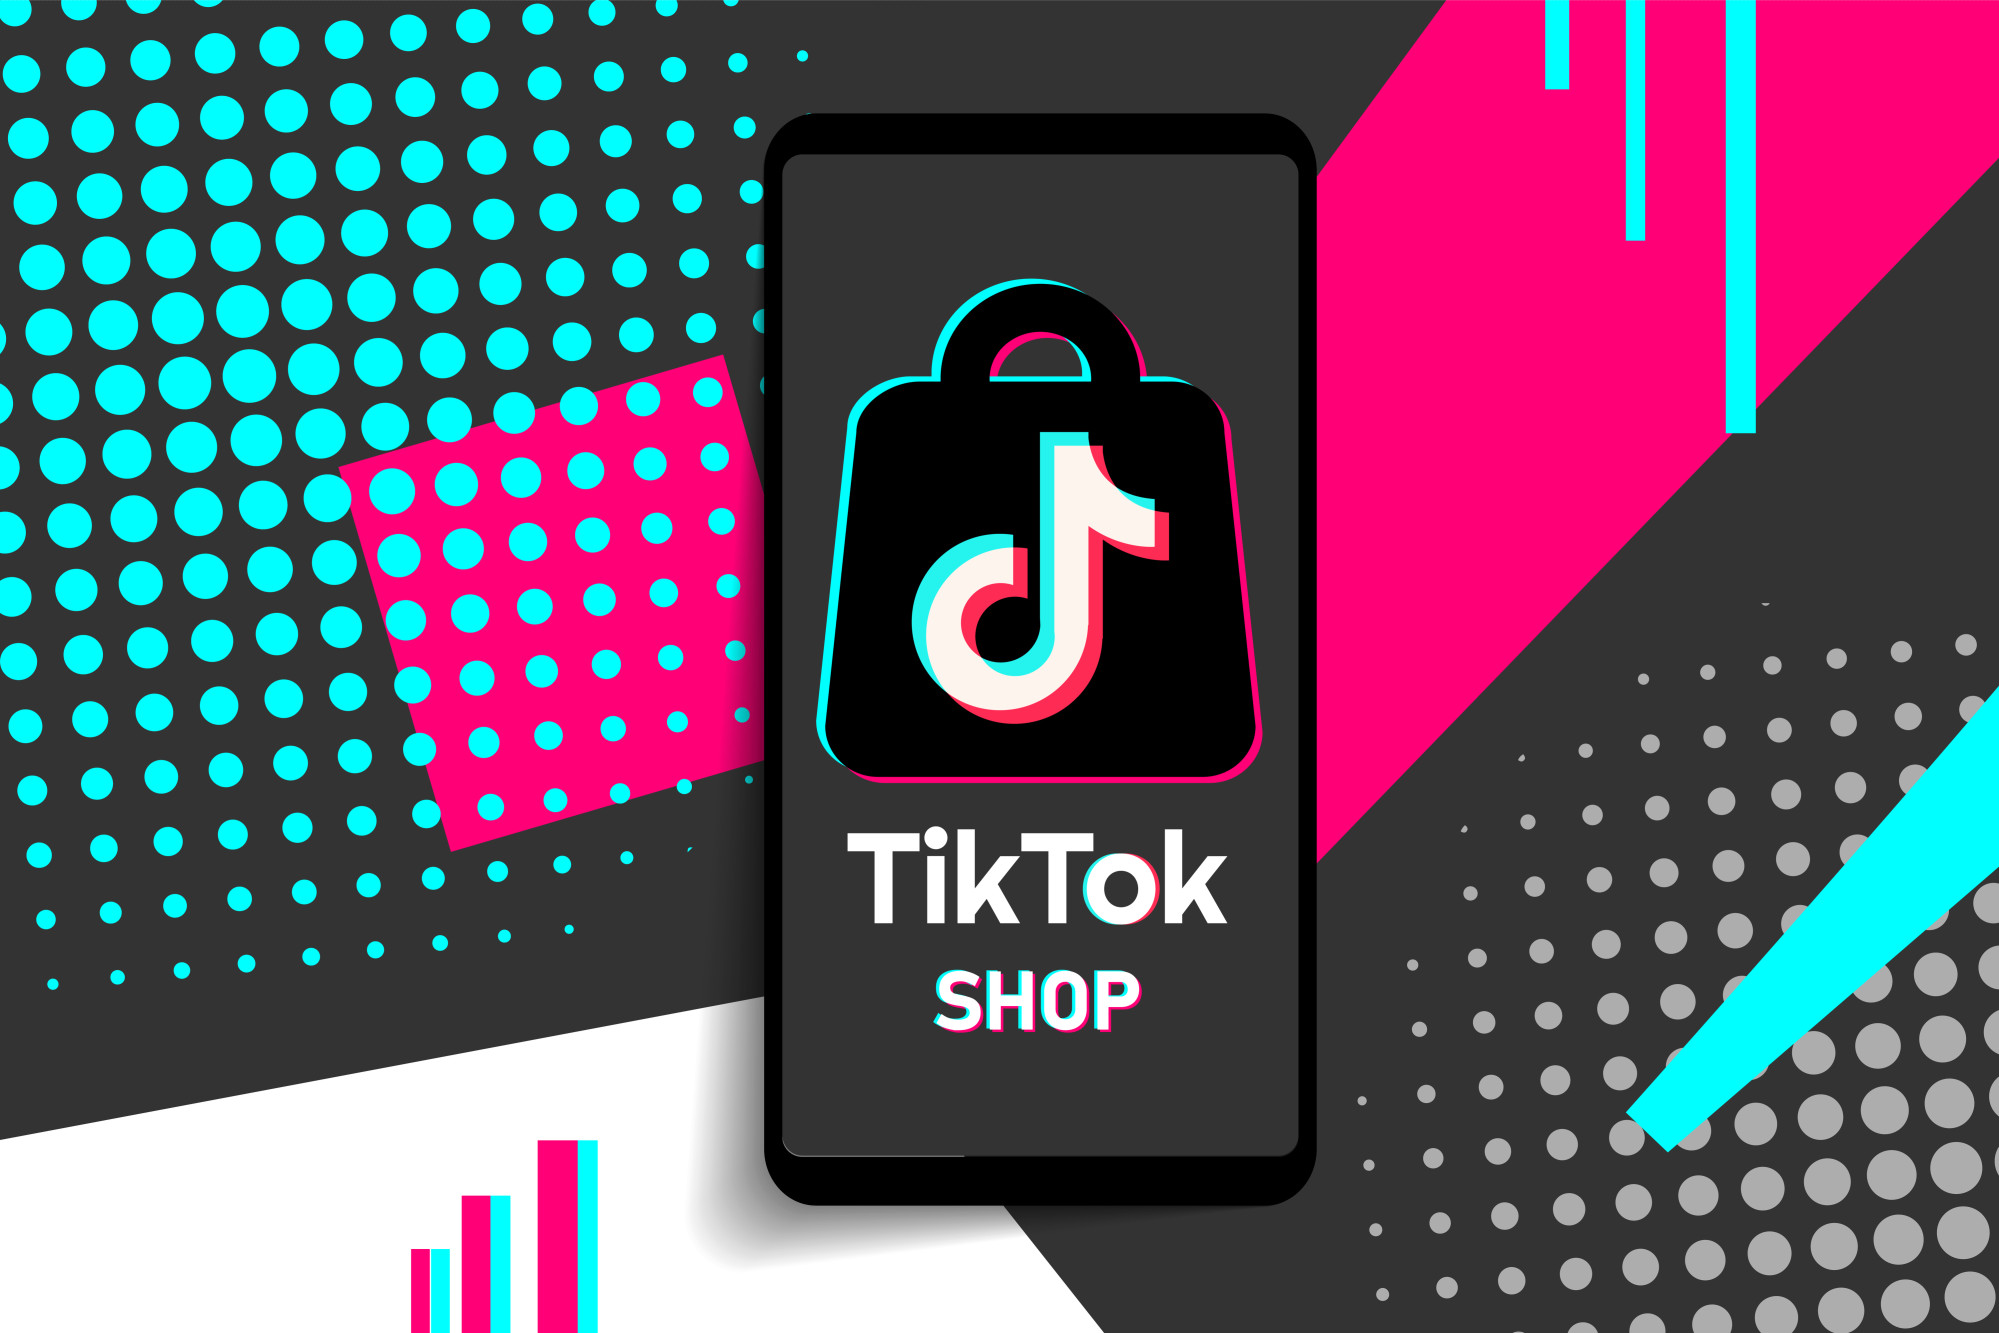 TikTok Shop is huge. Will it last? - The New Consumer